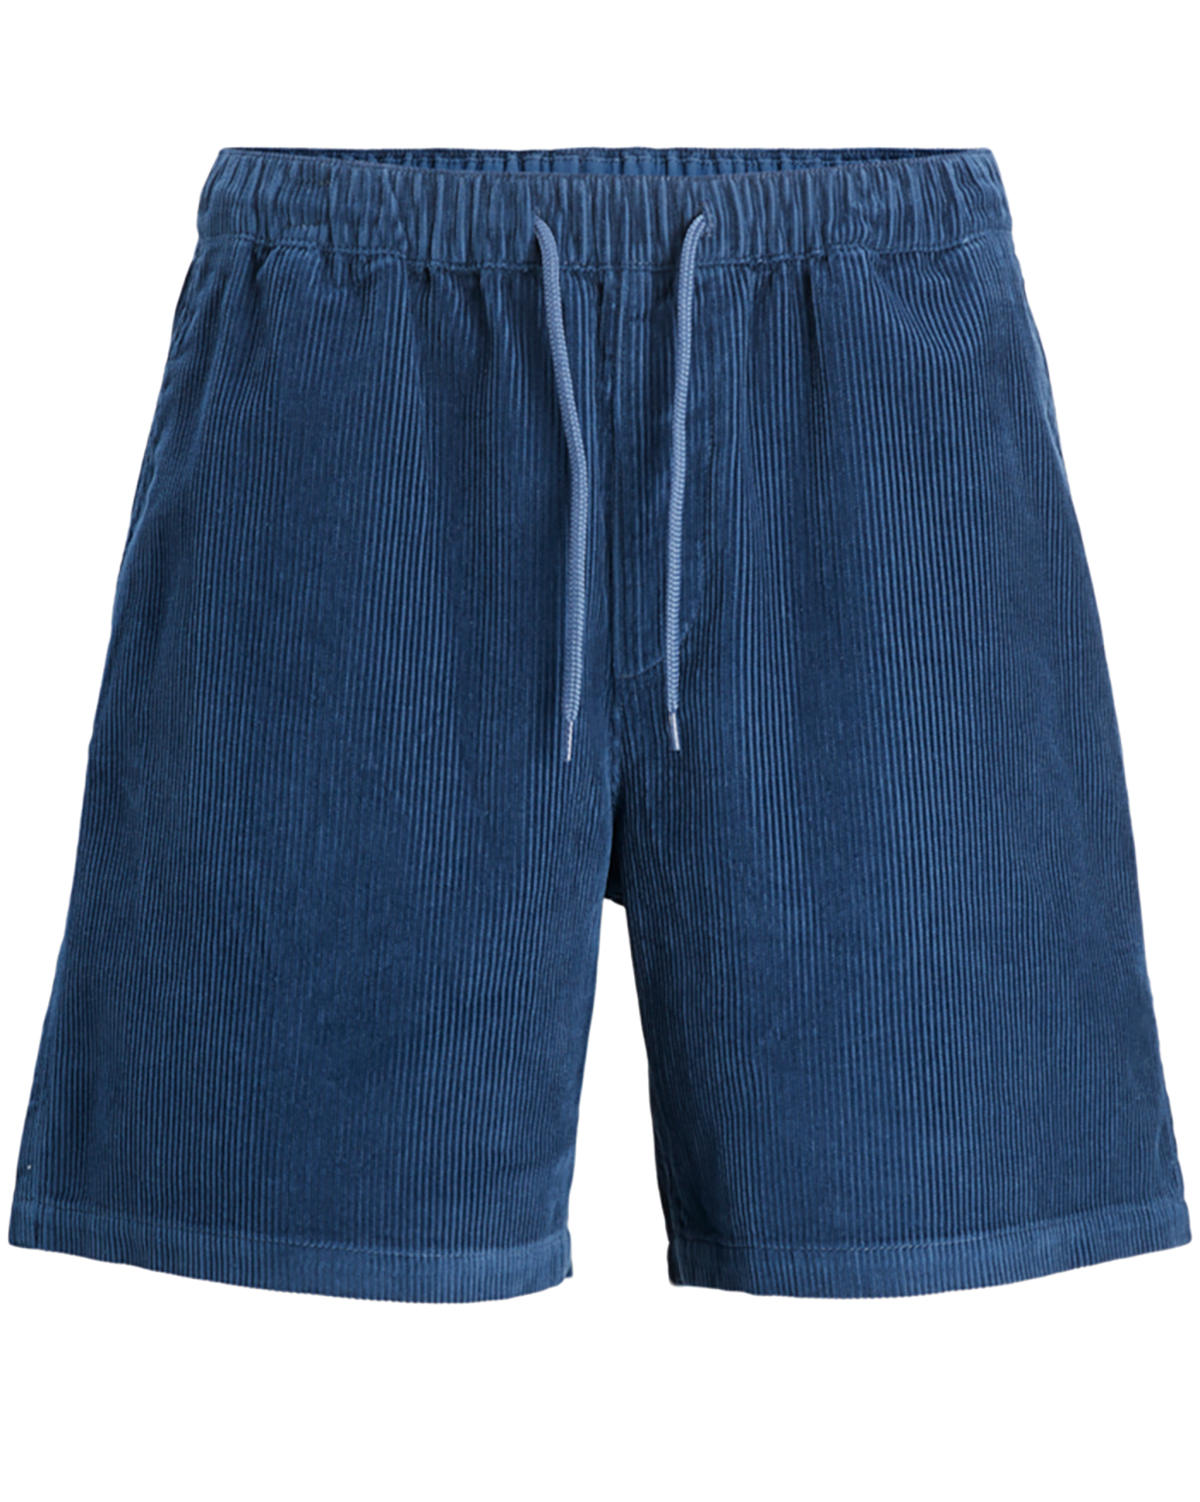 Se Jack & Jones sweat shorts wide leg fit, Bill Basic, blå - 194,XL+,XL hos Umame.dk